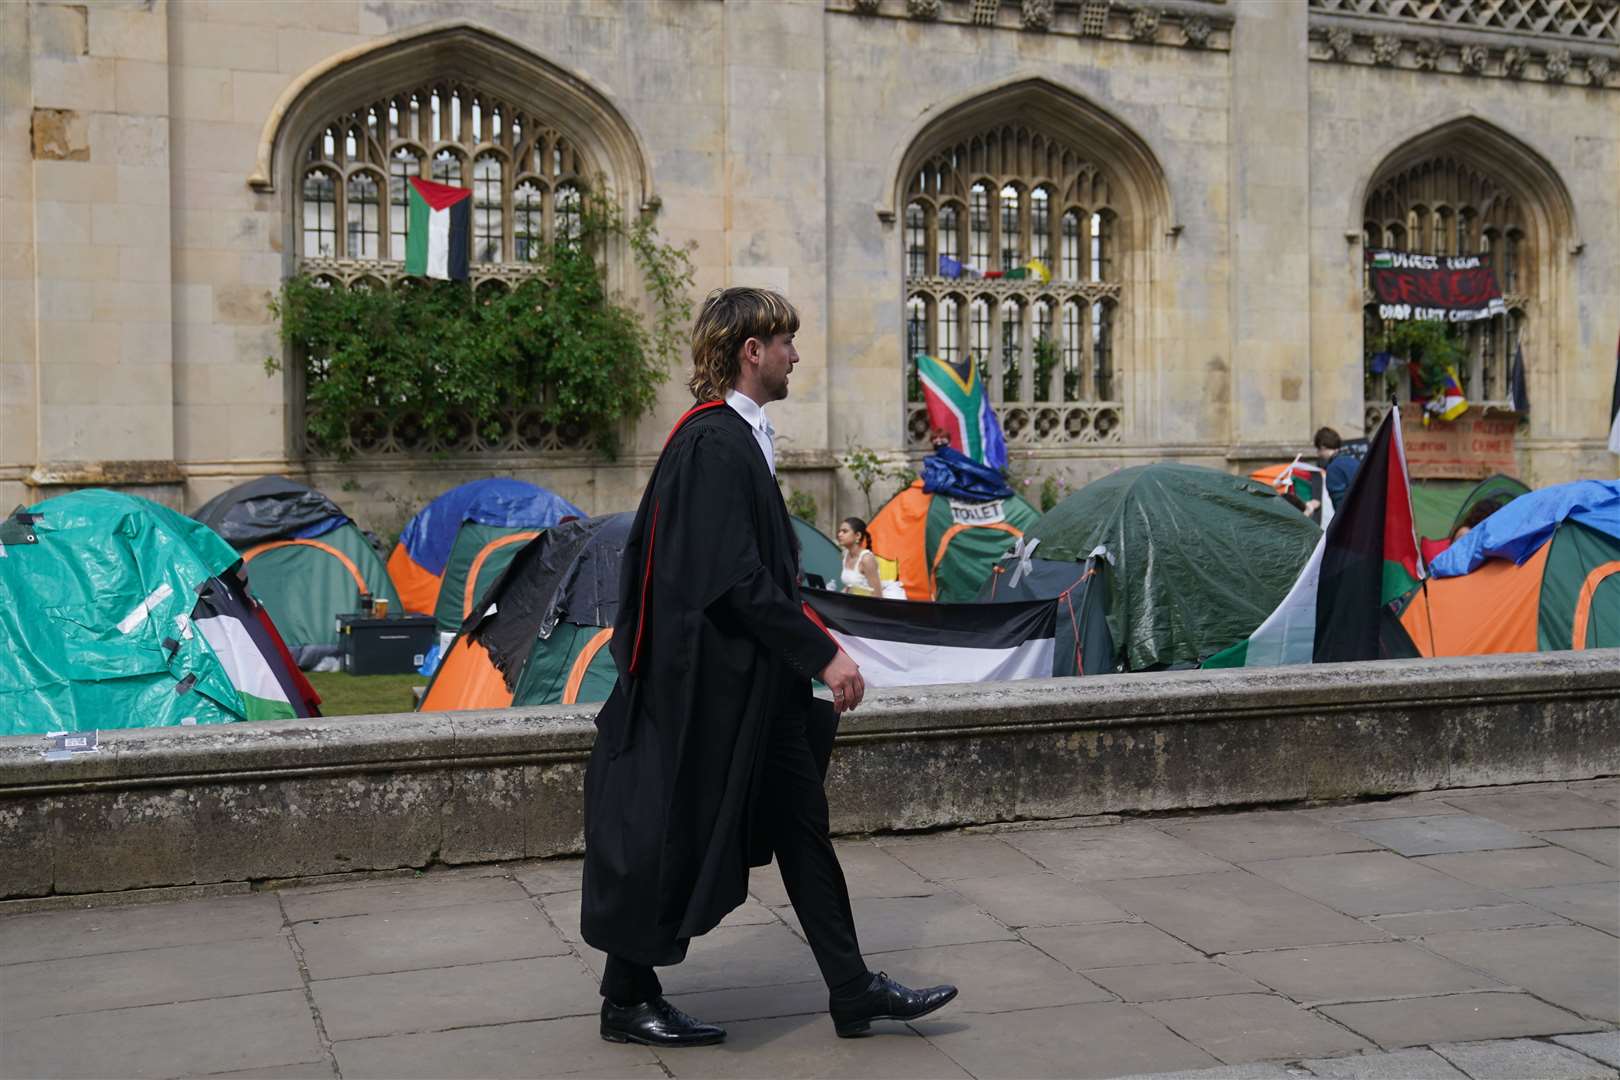 A graduating student walks past the Gaza protest encampment at Cambridge University (Joe Giddens/ PA)